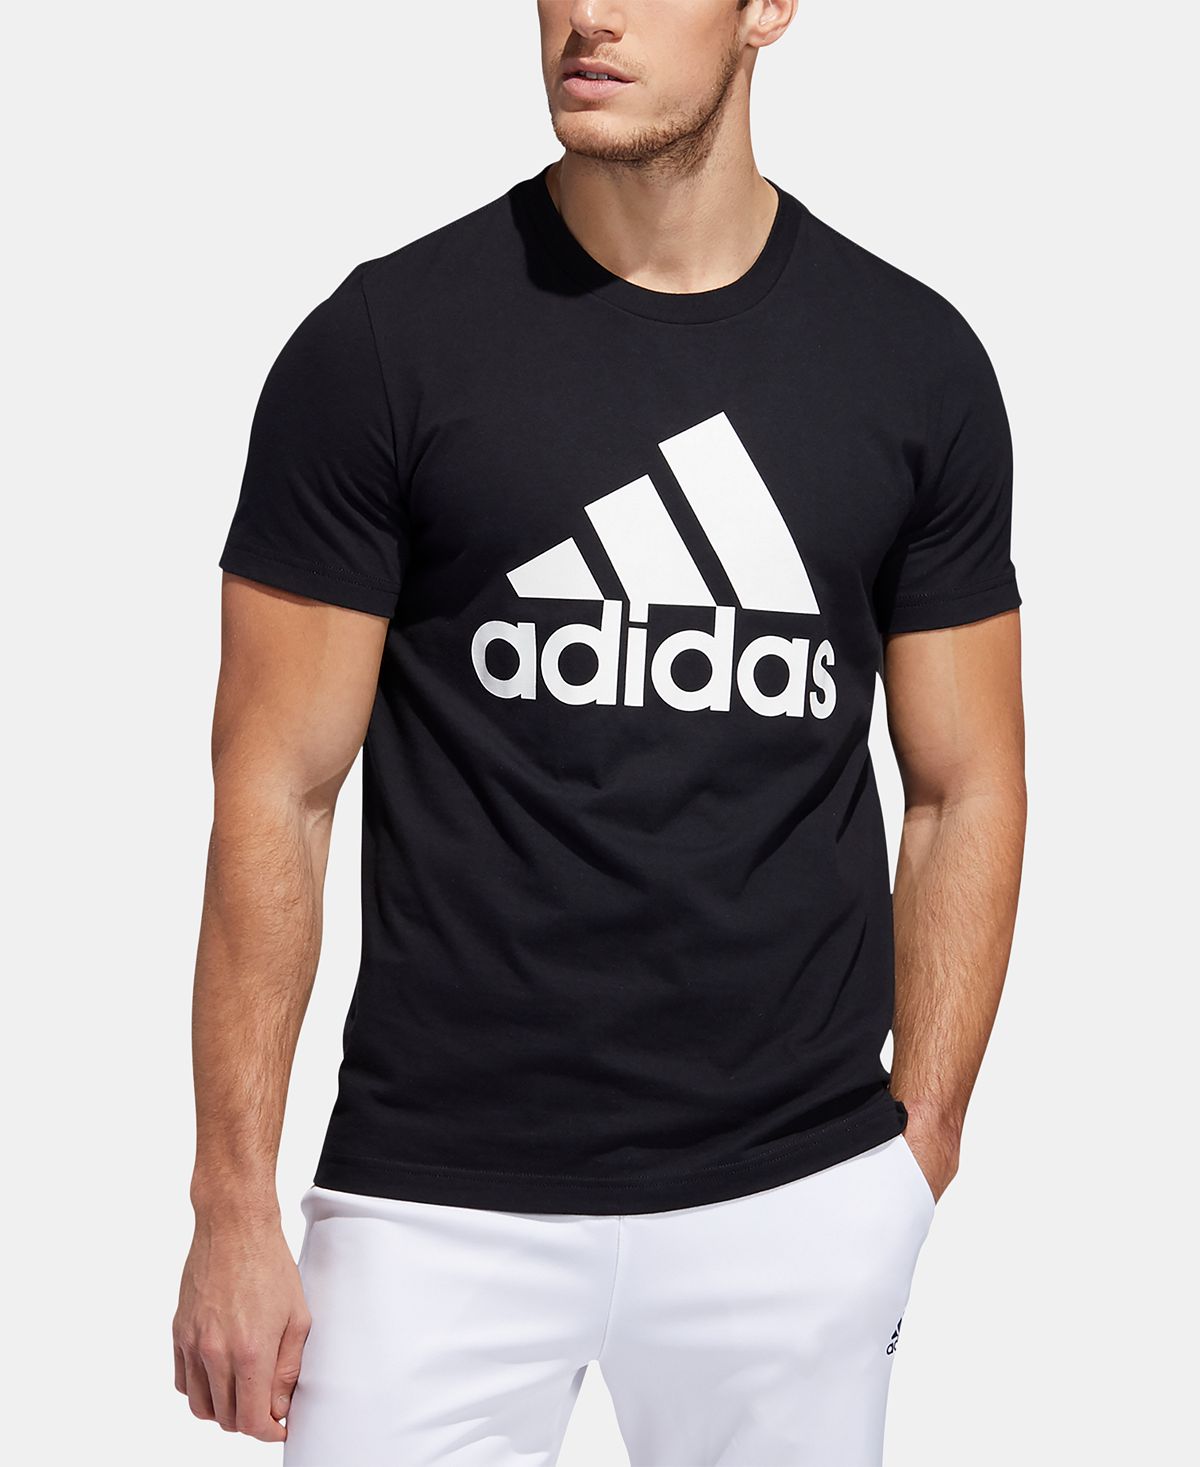 Адидас футболка футболка черная мужская